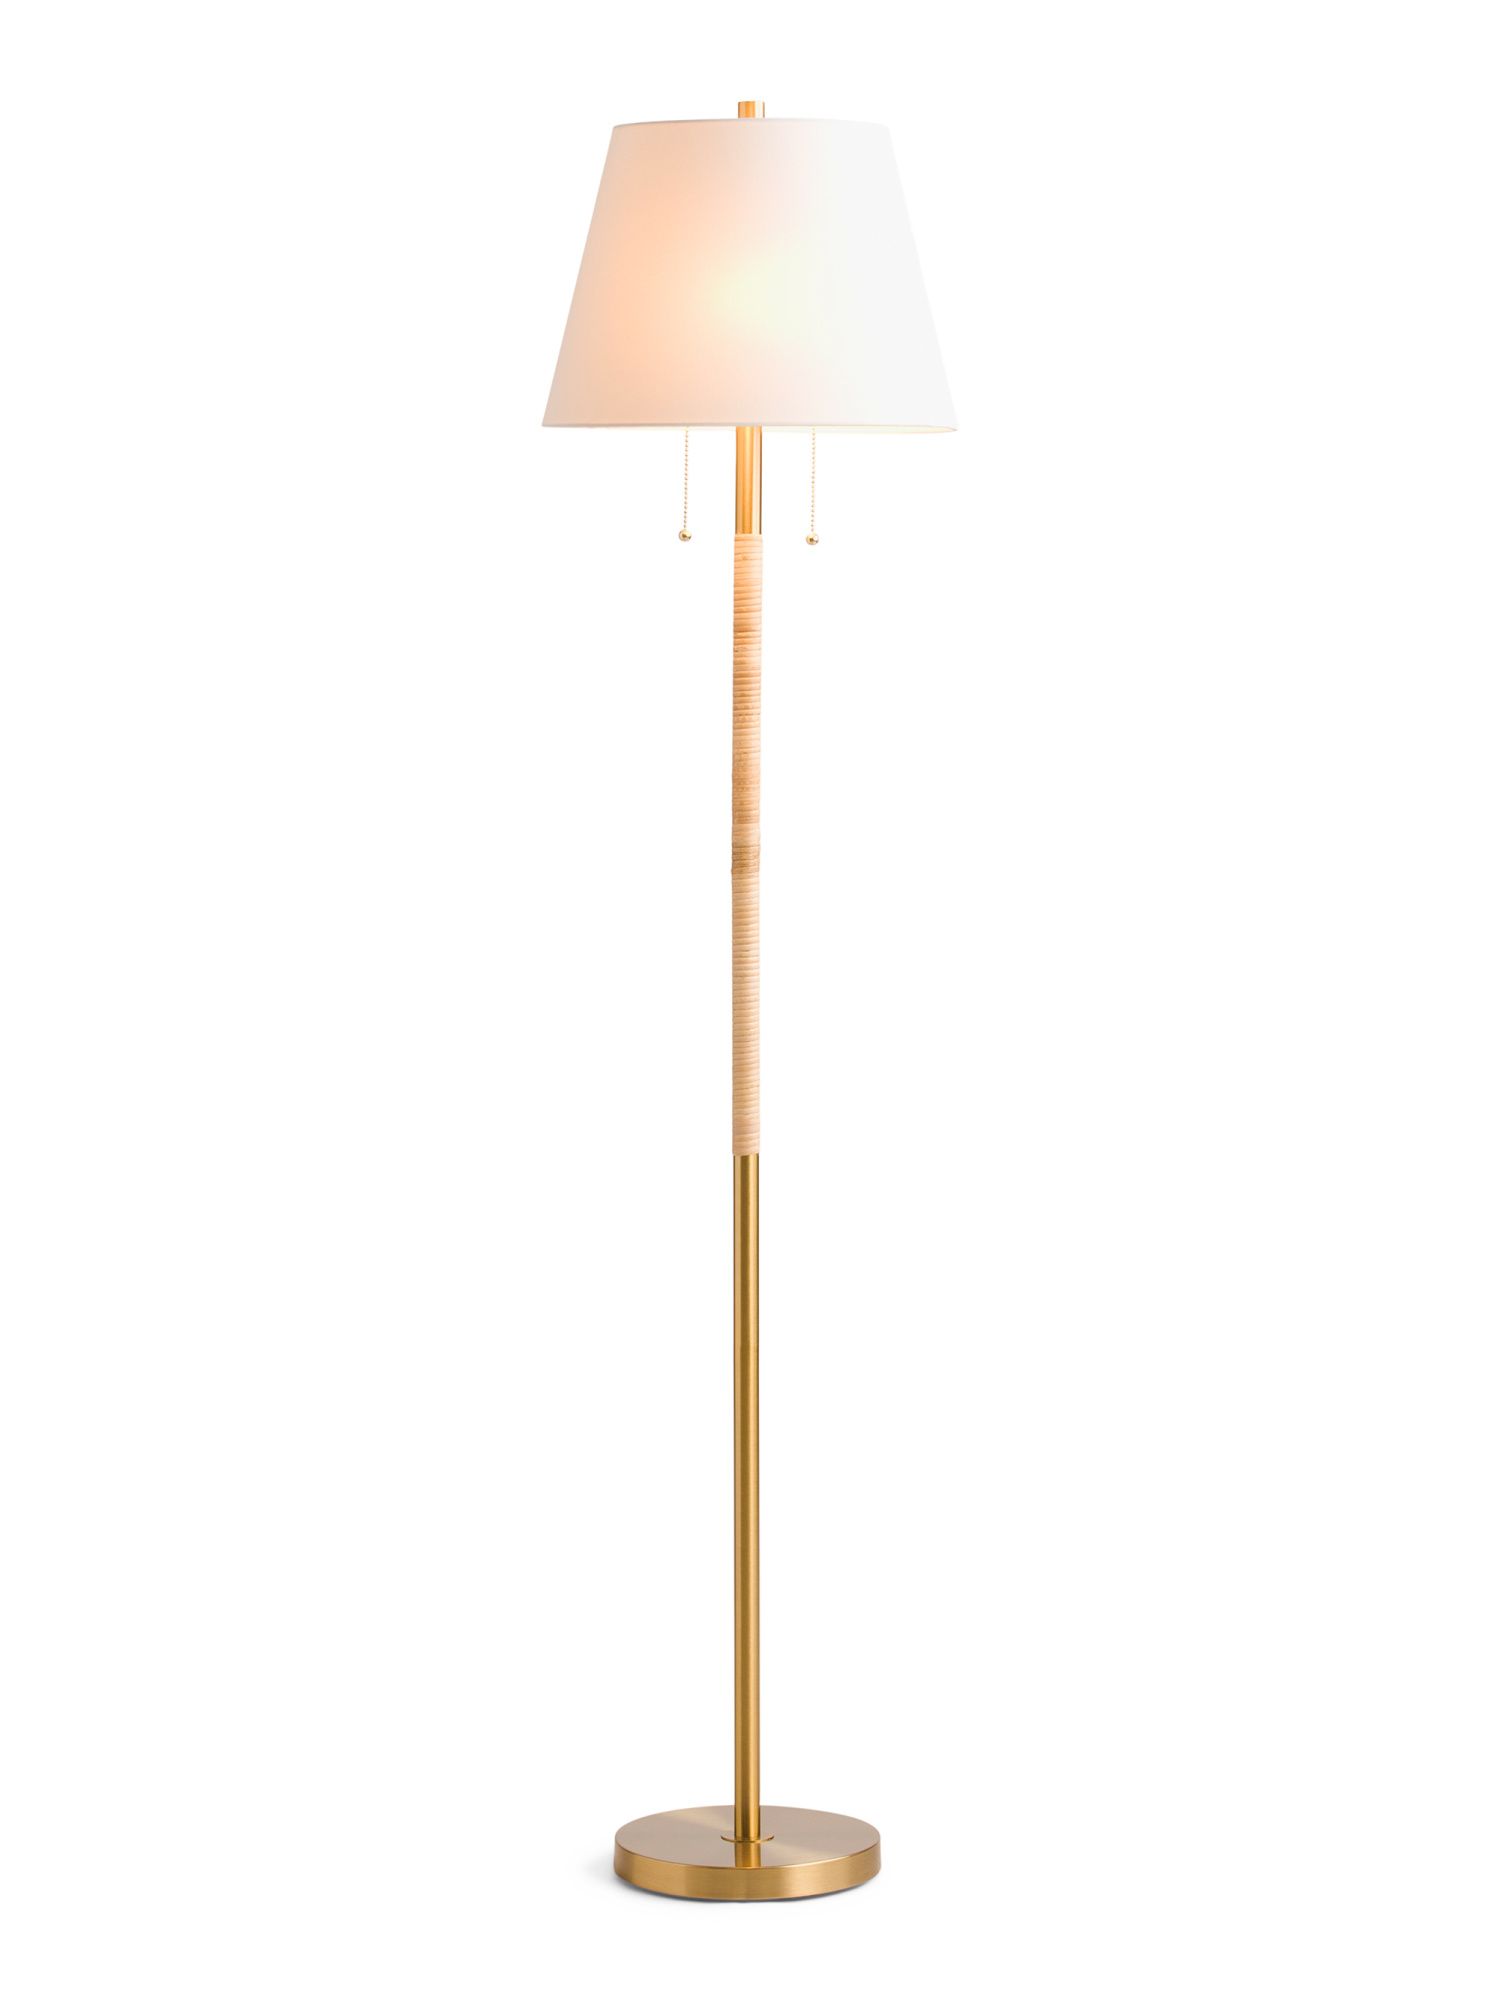 62in Metal Floor Lamp | TJ Maxx